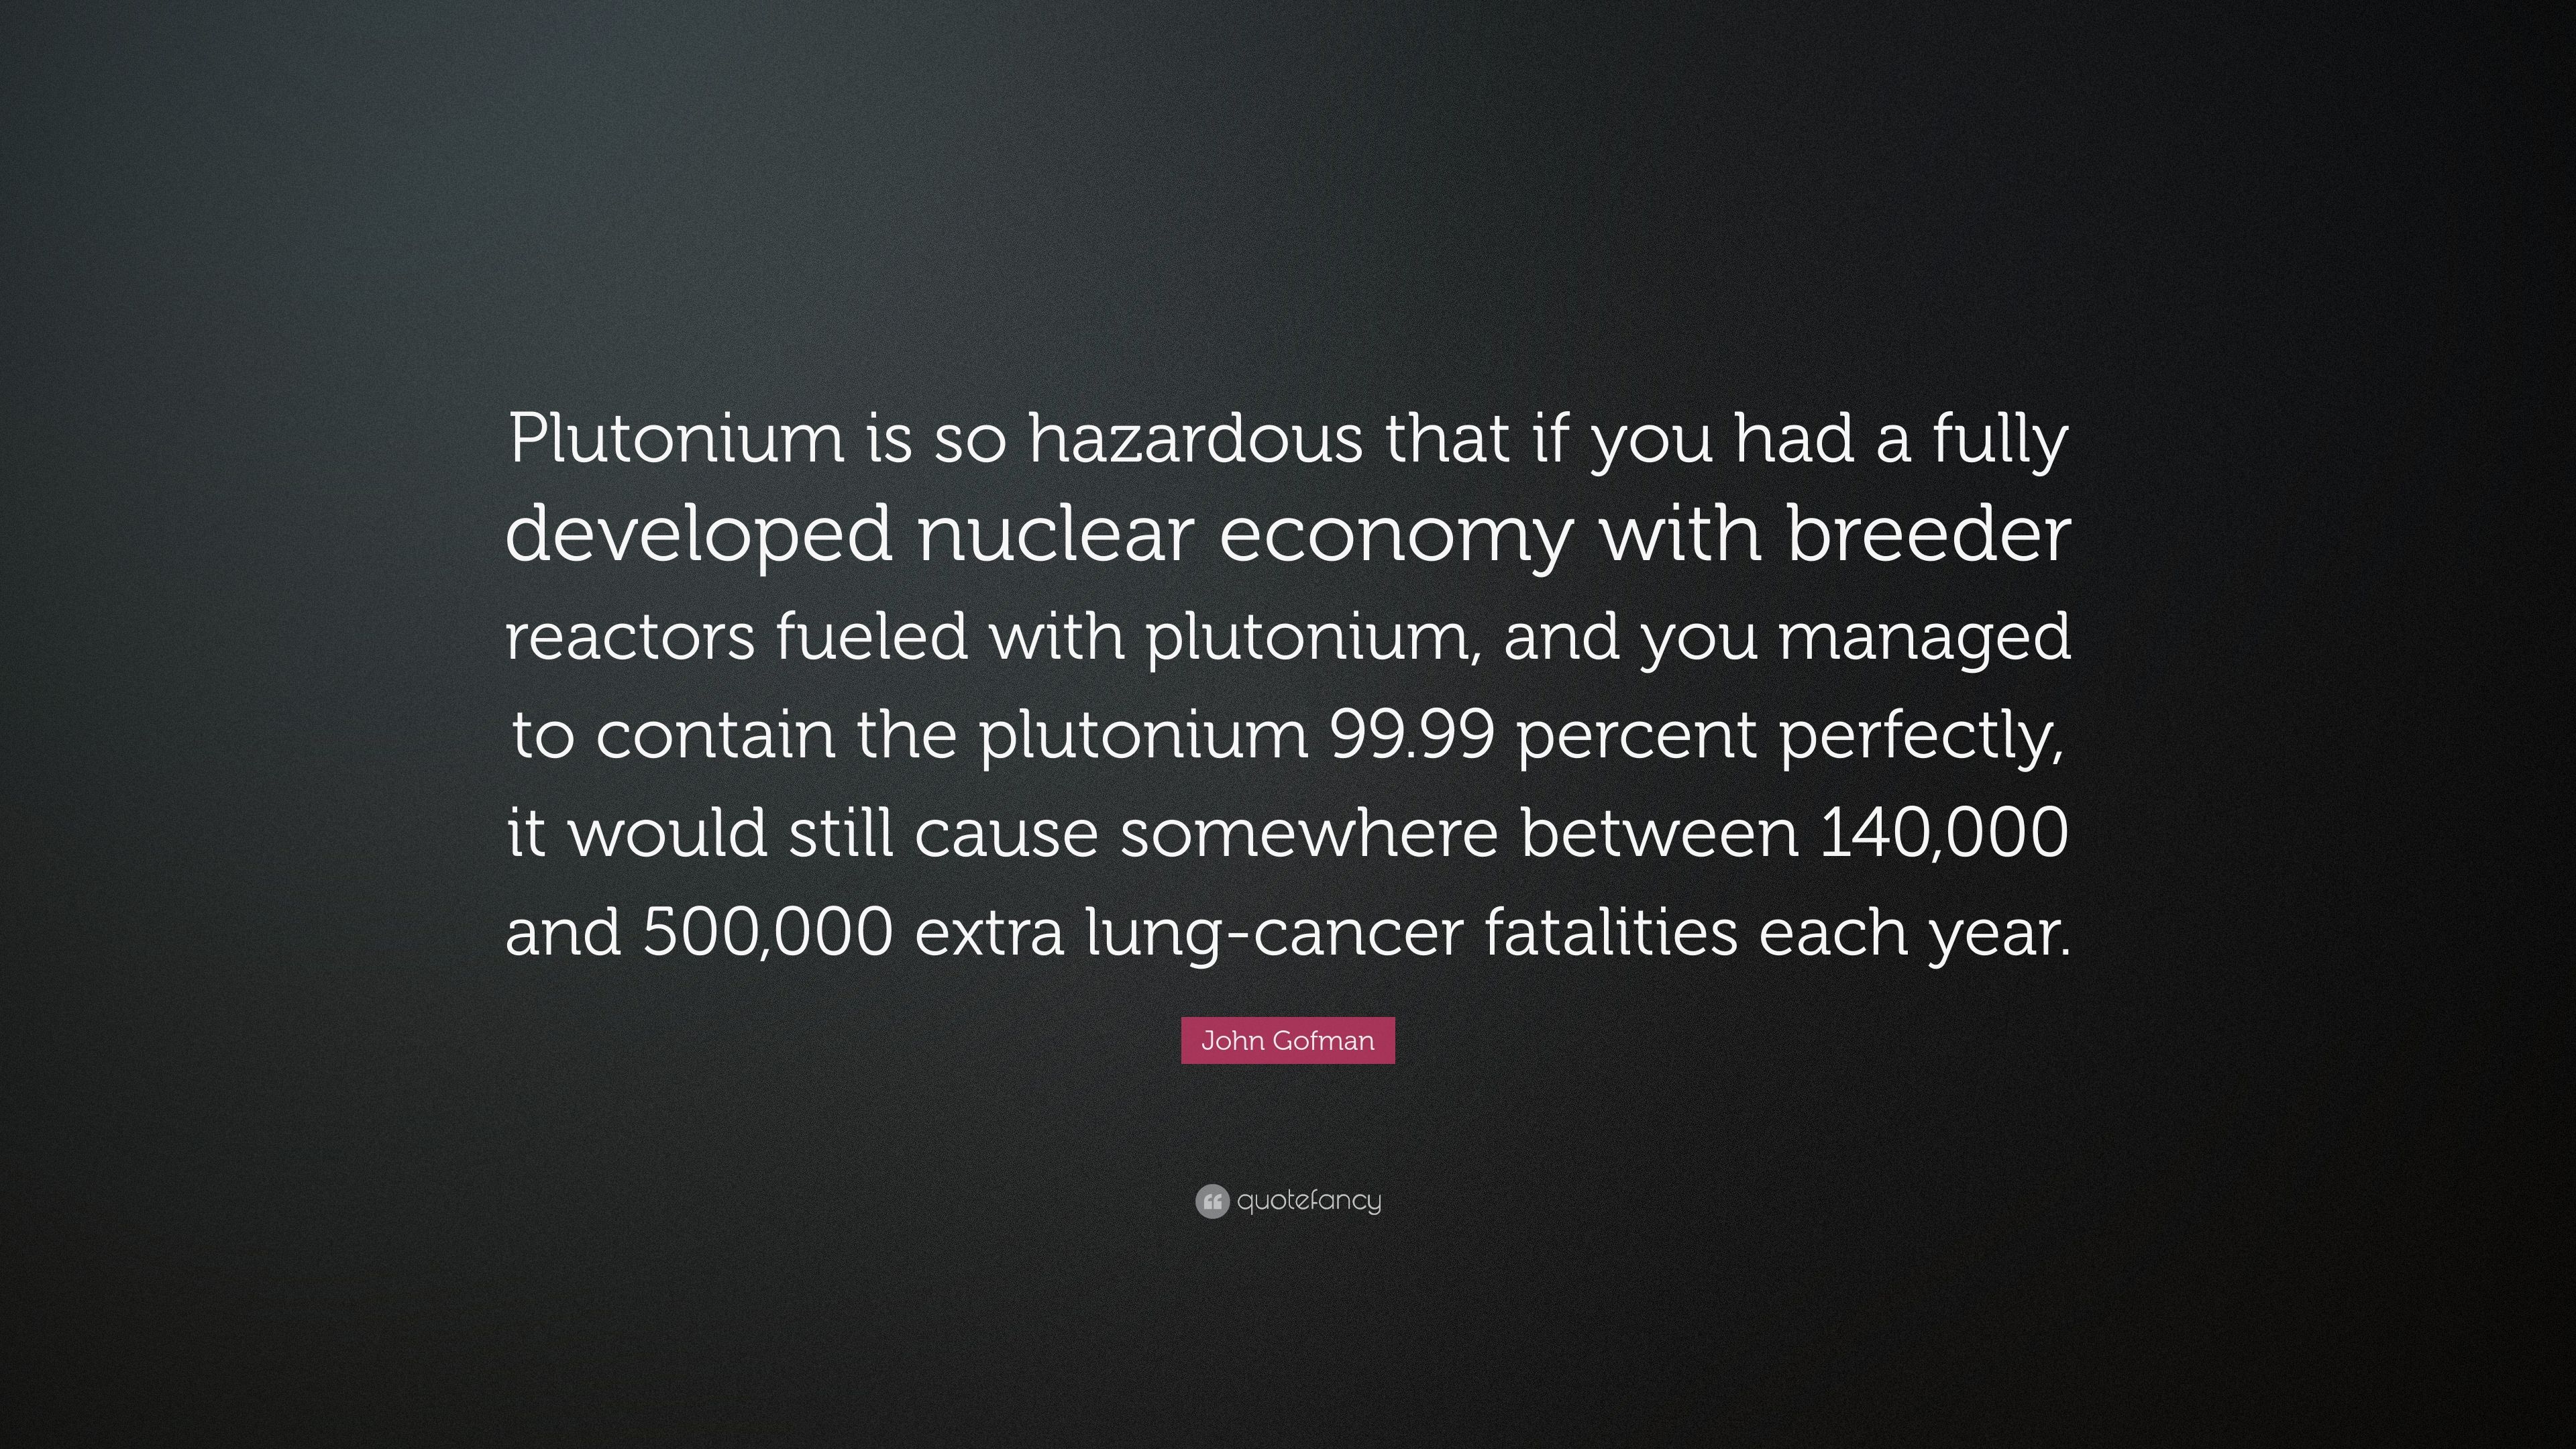 John Gofman Quote: “Plutonium is so hazardous that if you